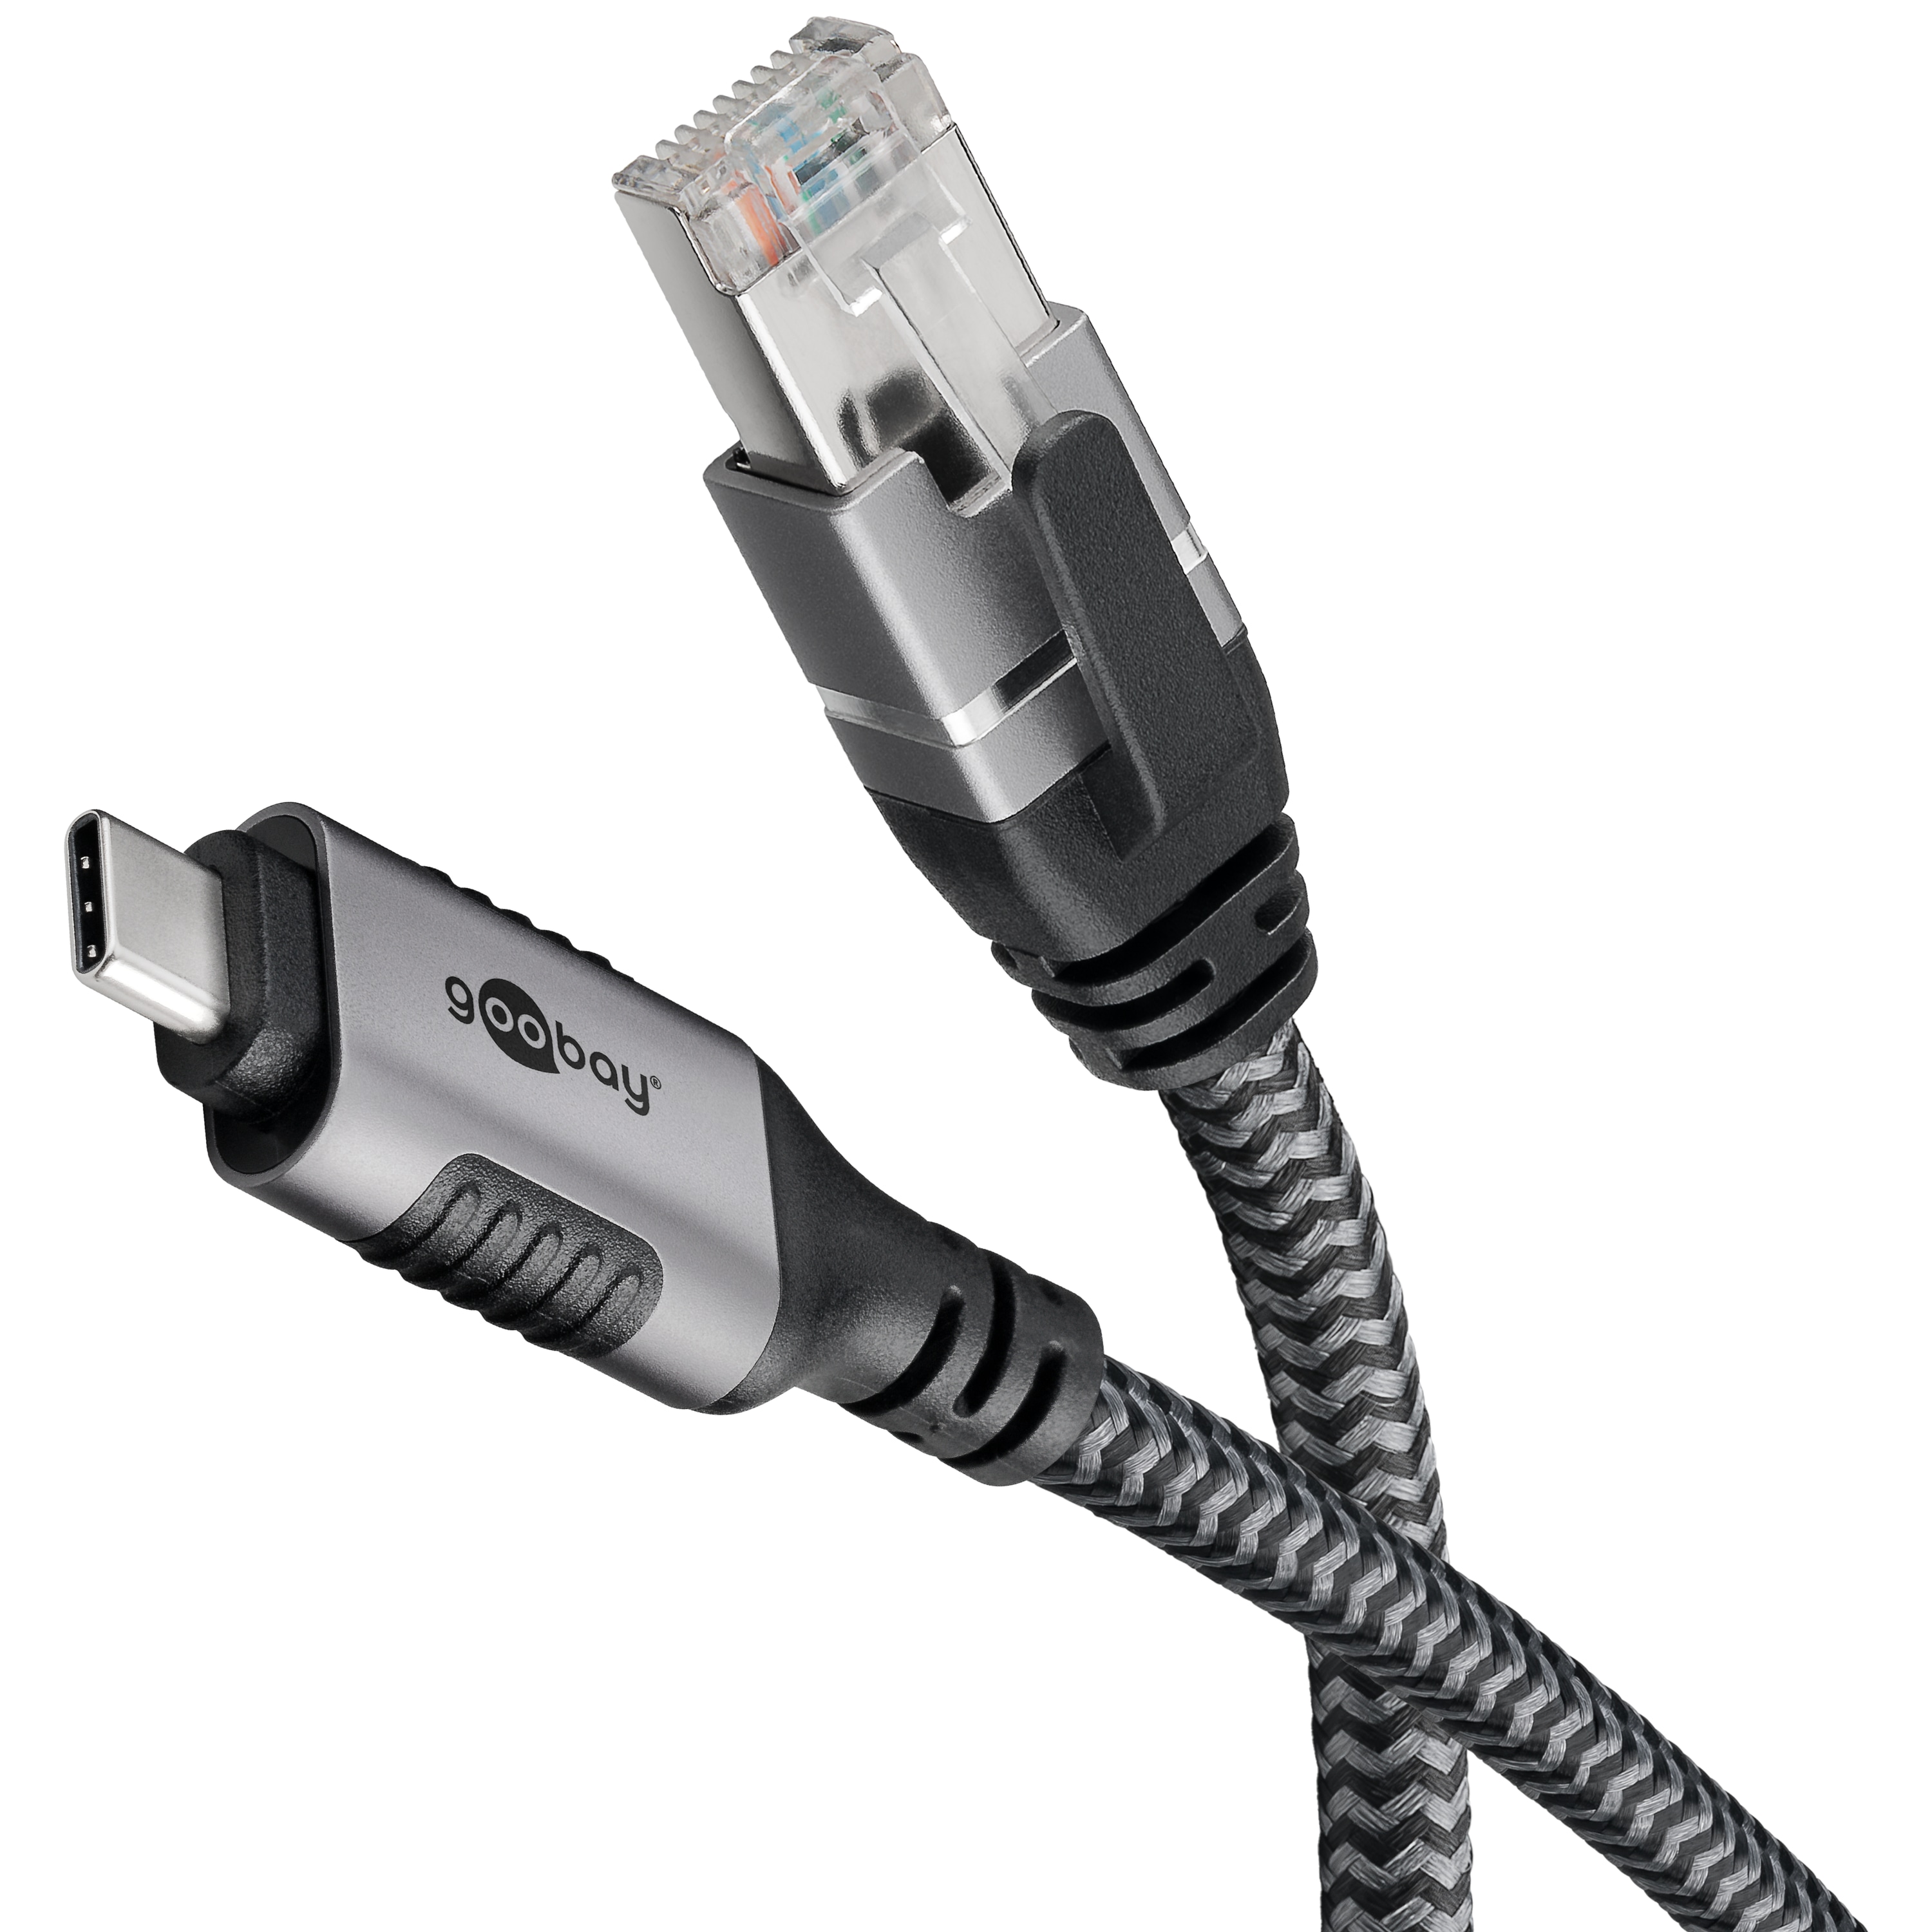 GOOBAY Ethernet-Kabel CAT6 USB-AC 3.1 auf RJ45 1,5m